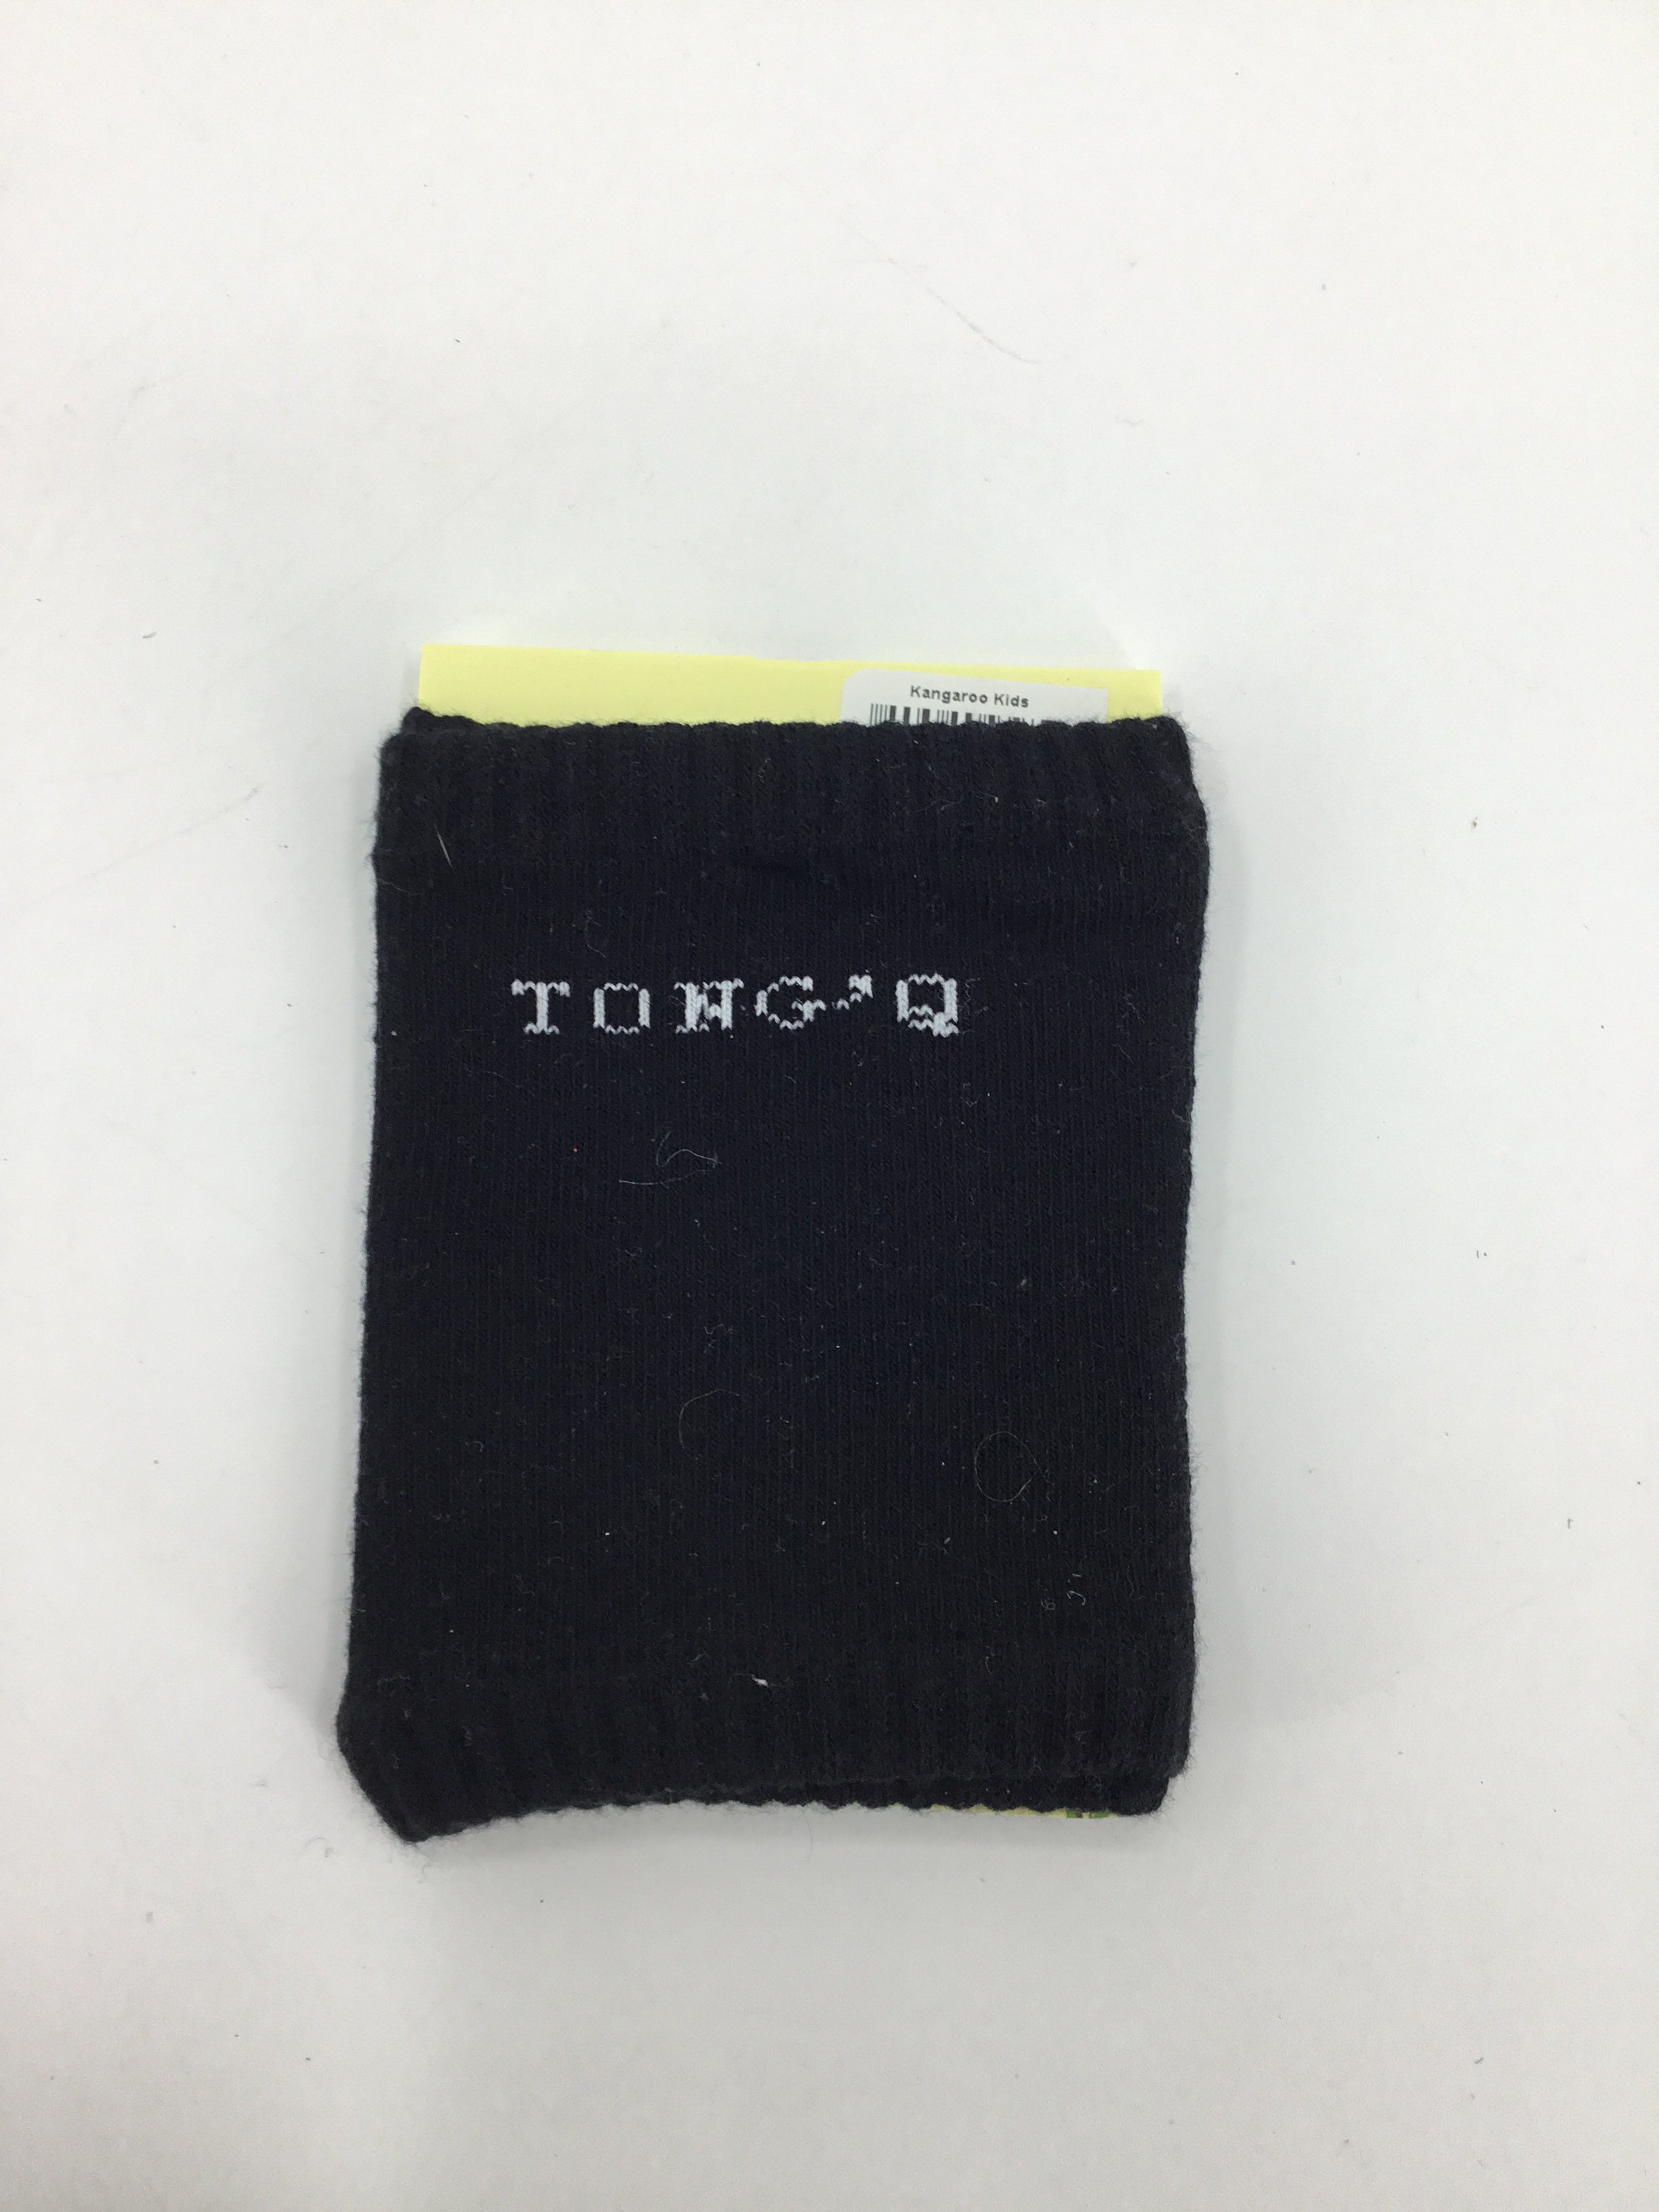 tongq Child Size Toddler Black Socks - girls